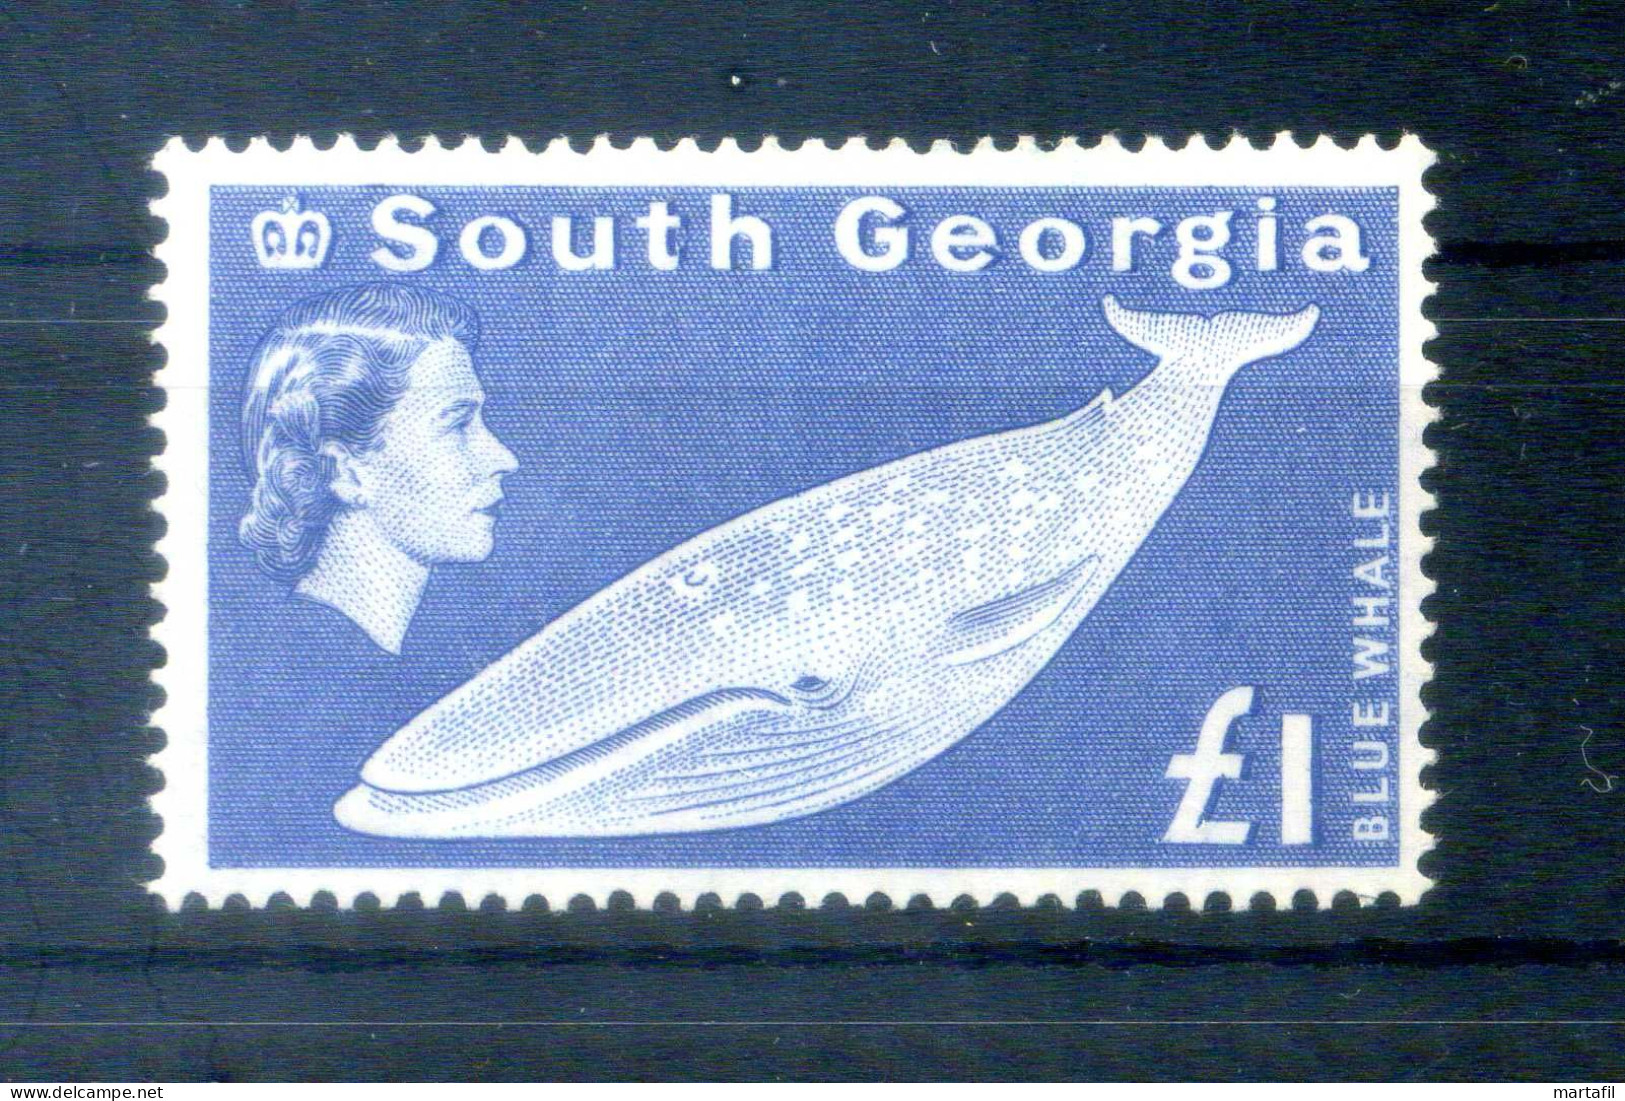 1963-69 FALKLAND Georgia Del Sud N.23 MNH ** 1£. Blue Whale, Oltremare - Südgeorgien